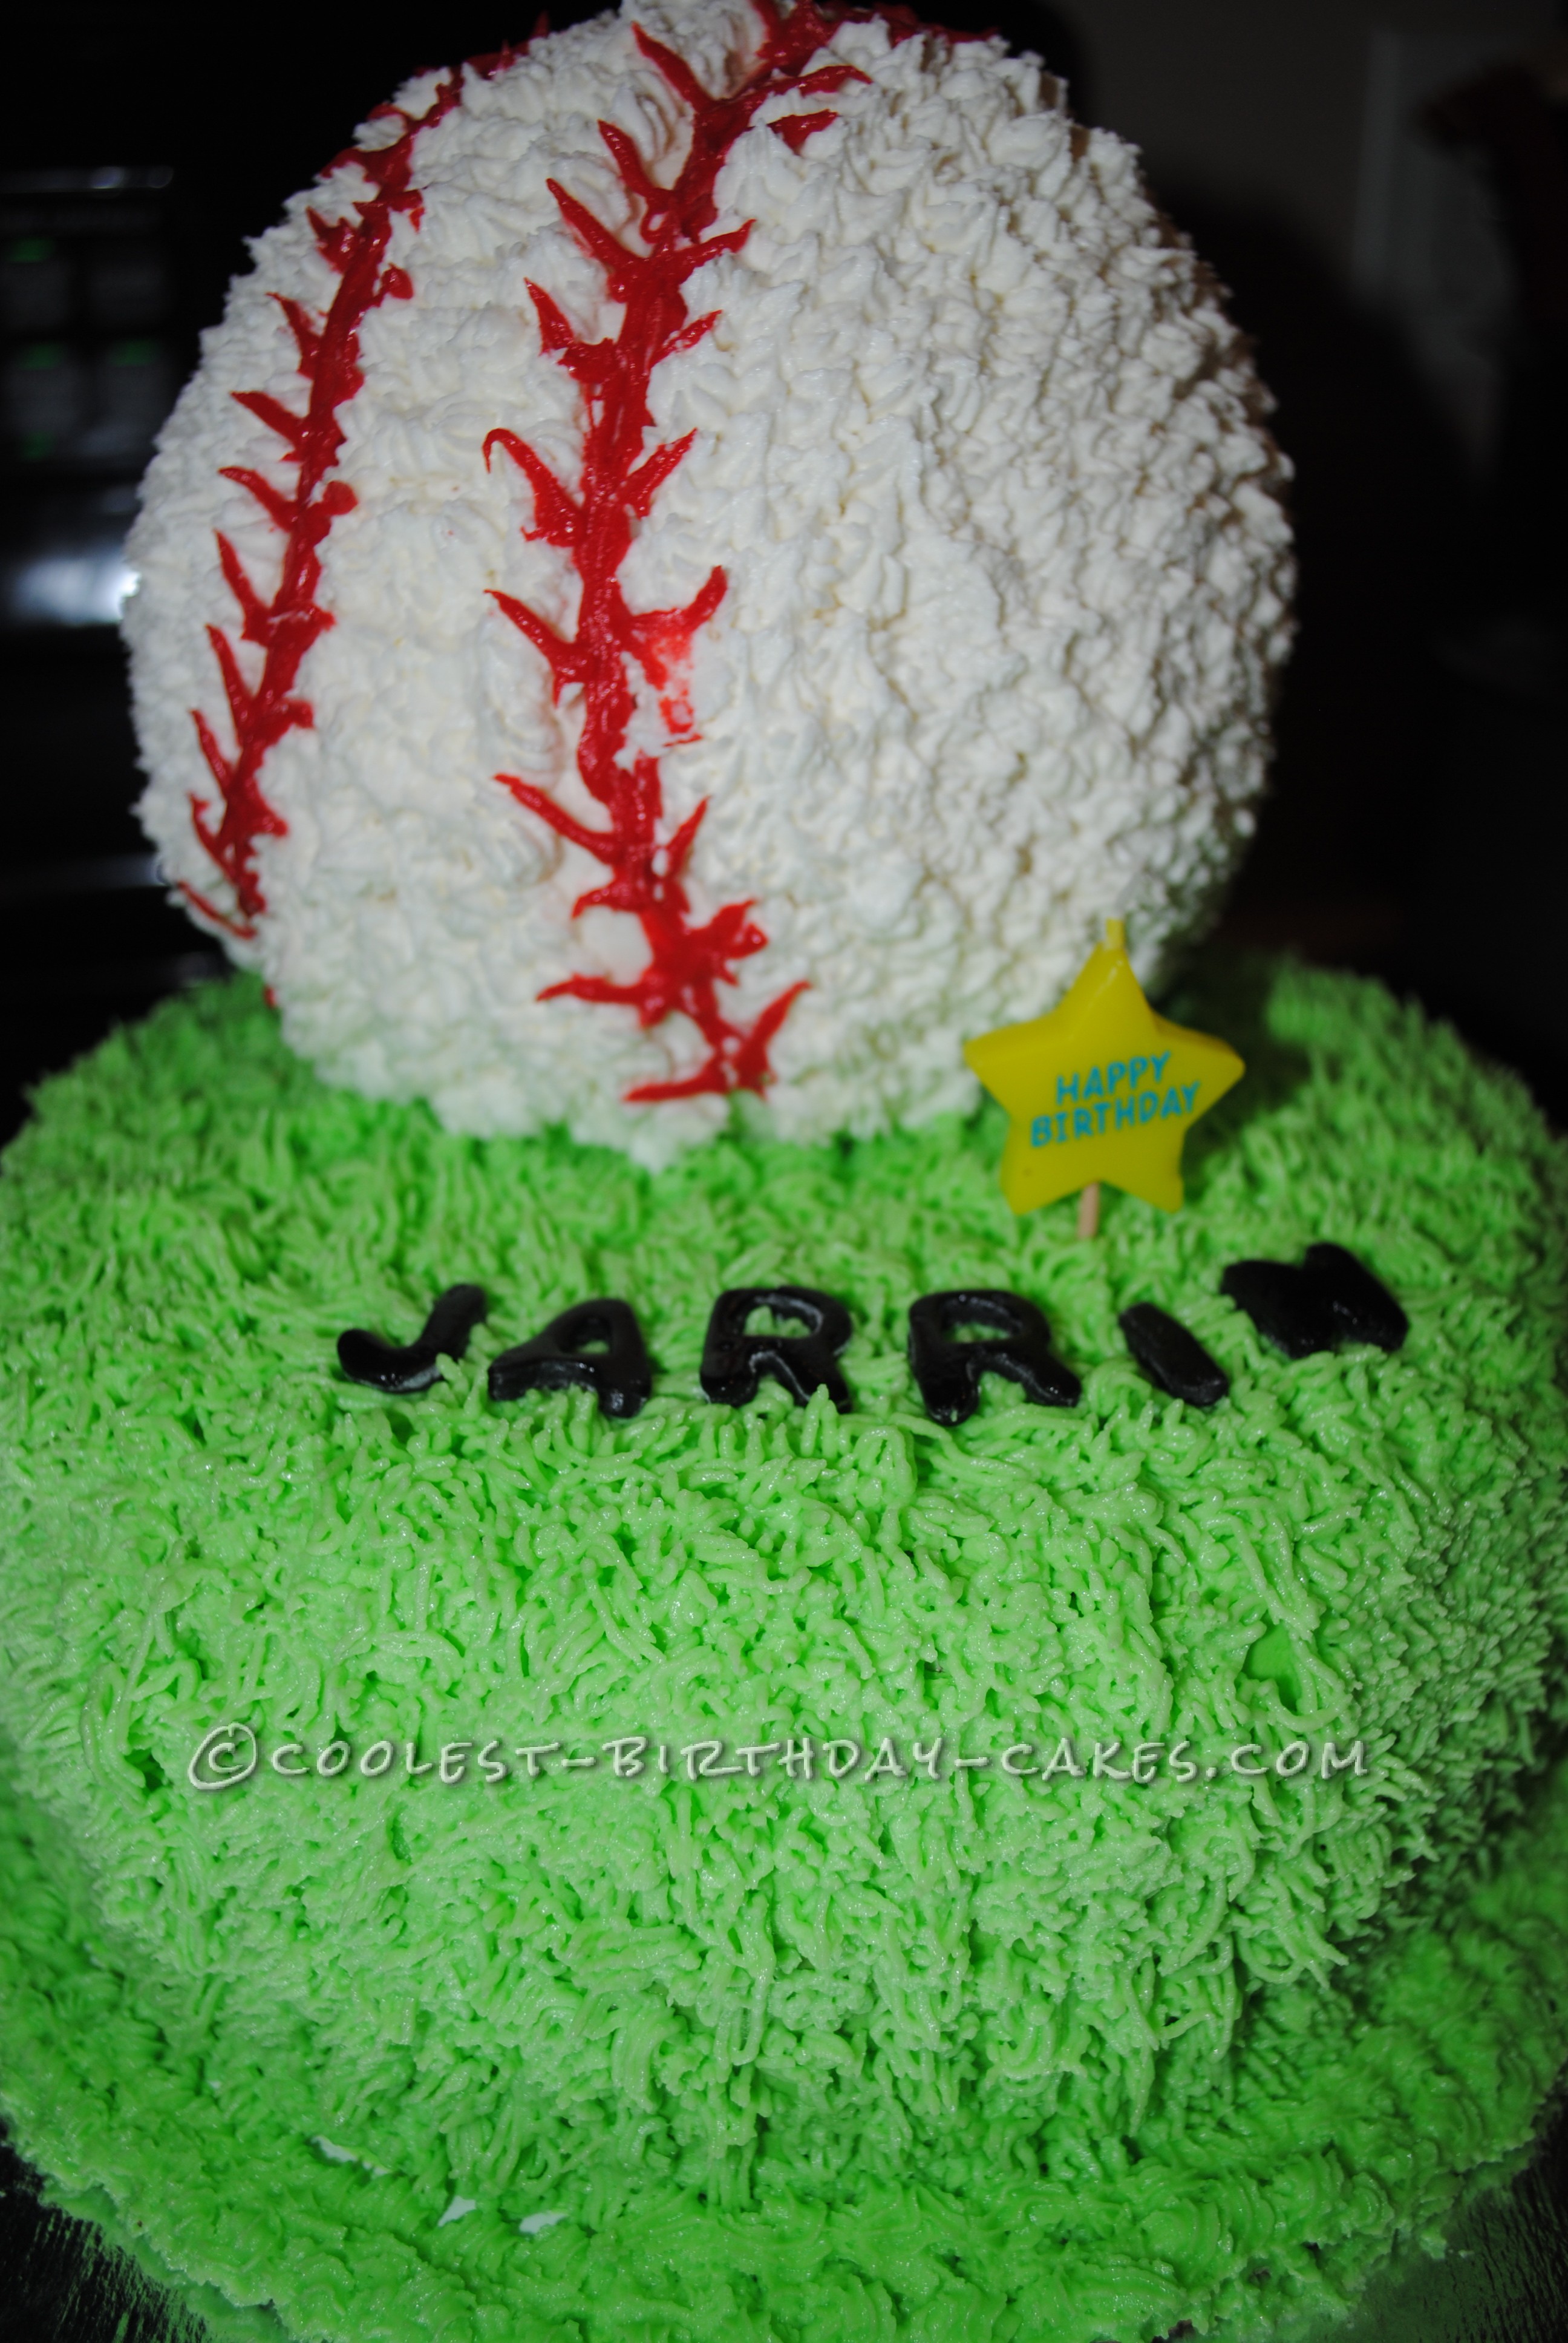 Coolest Baseball Birthday Cake